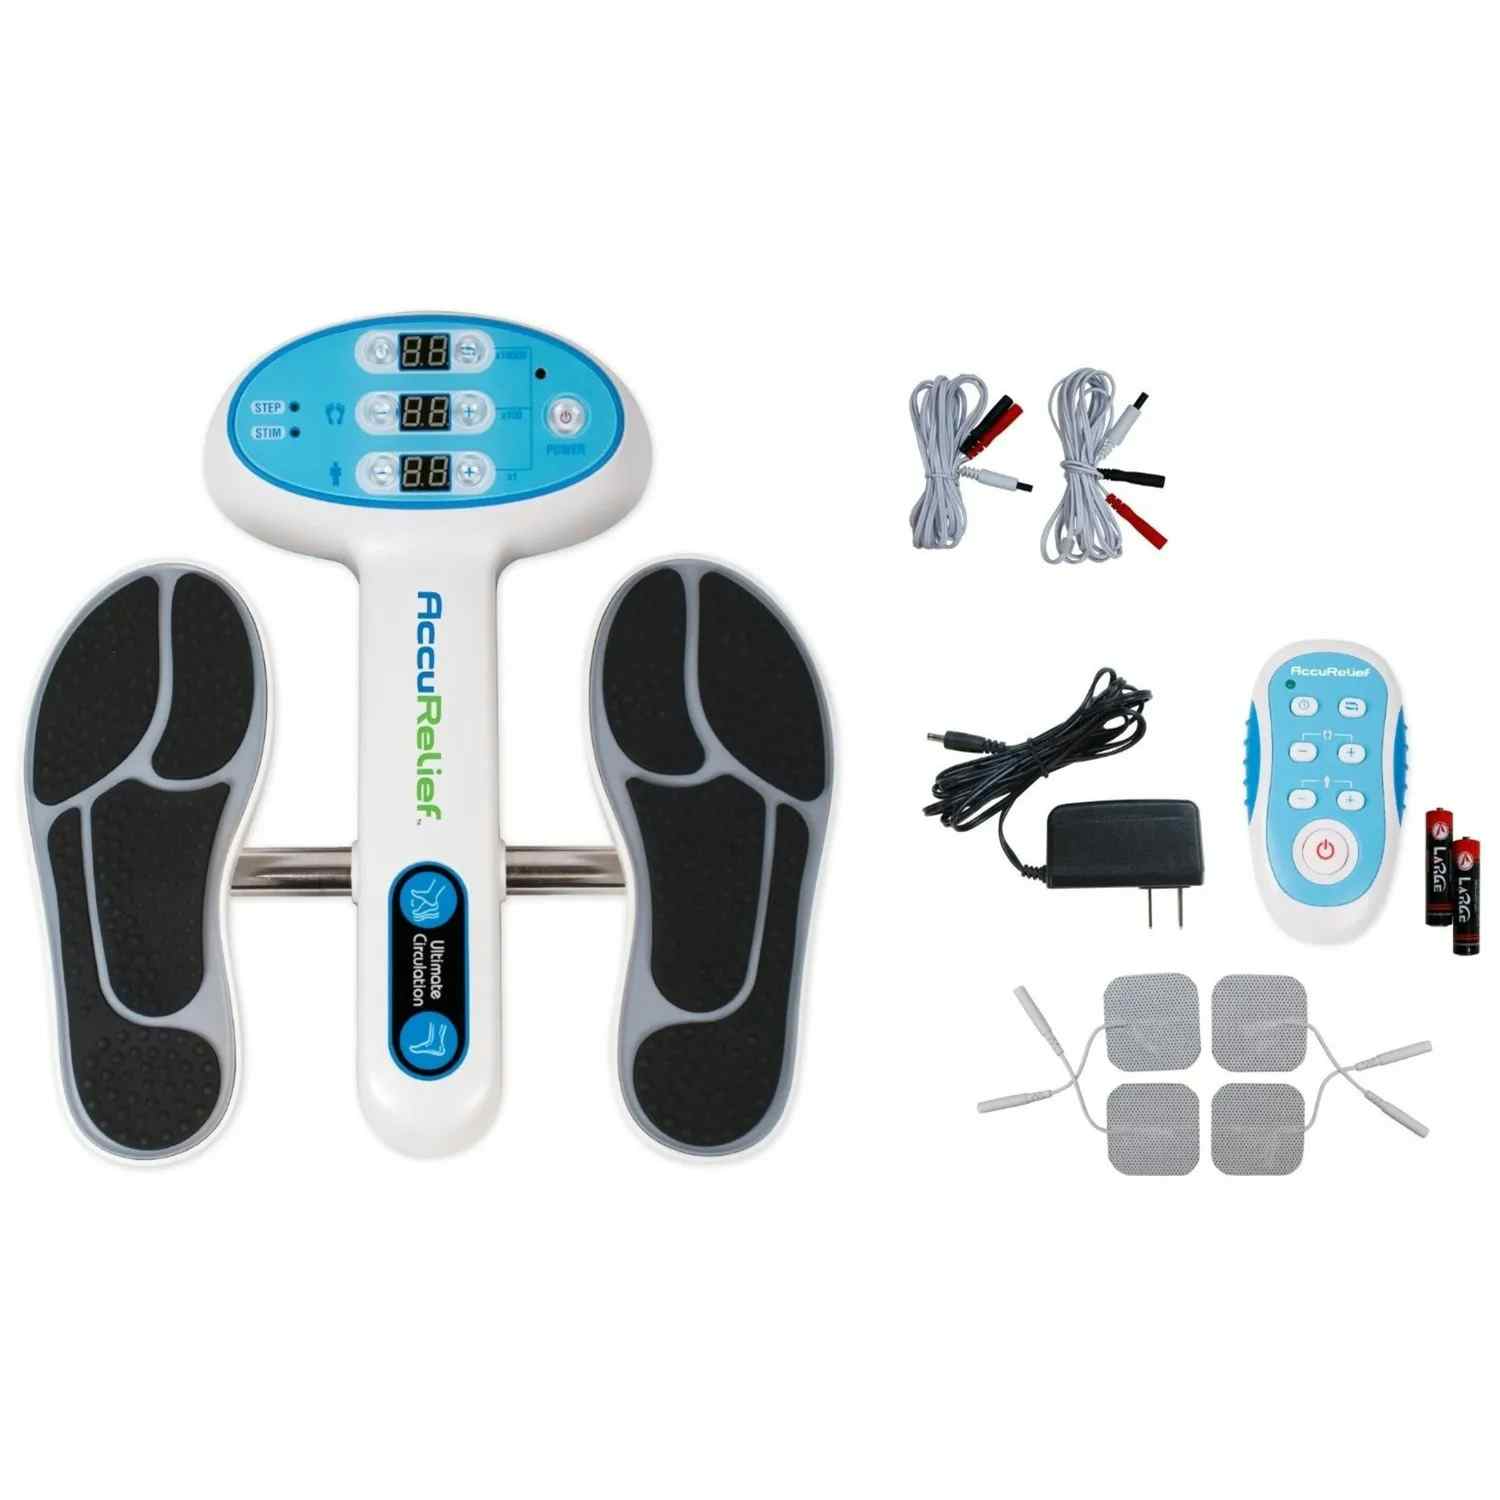 AccuRelief Ultimate Foot Circulator with Remote Control, includes